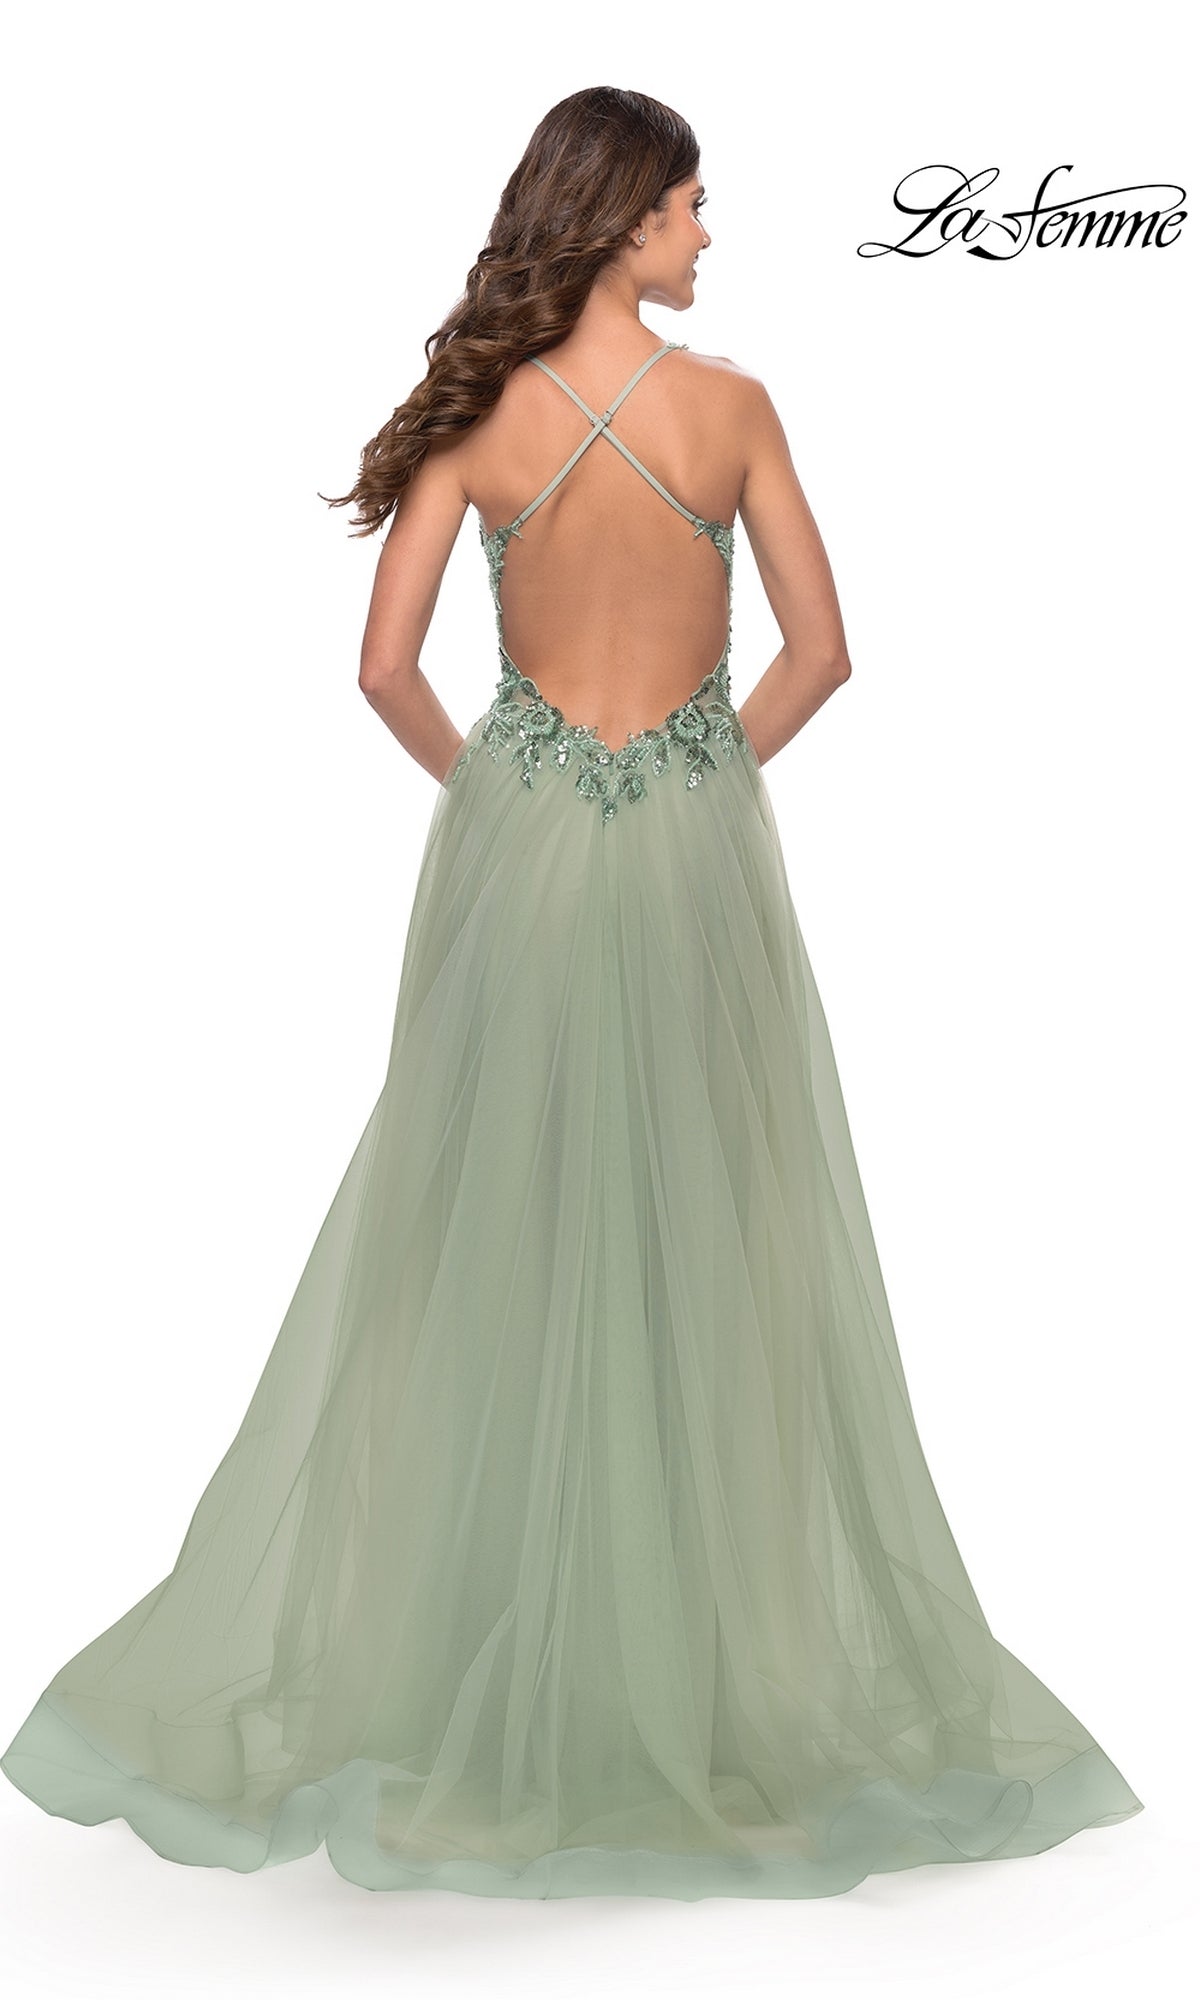  La Femme 31369 Formal Prom Dress